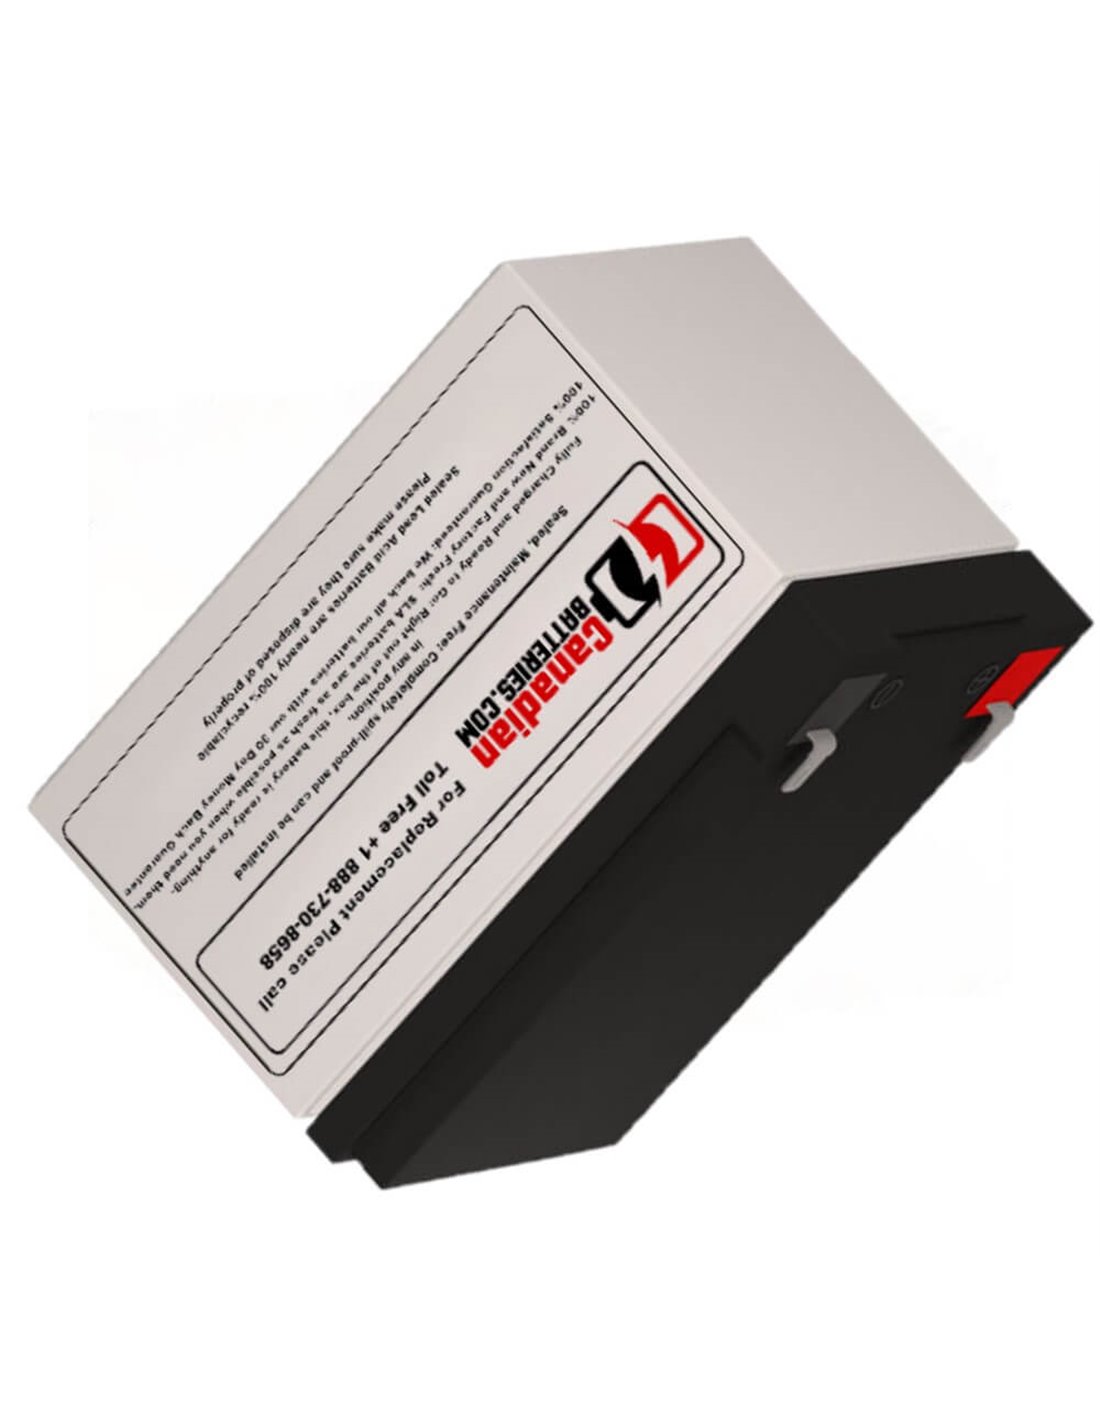 Battery for Toshiba 7.5kva UPS, 1 x 12V, 12Ah - 144Wh